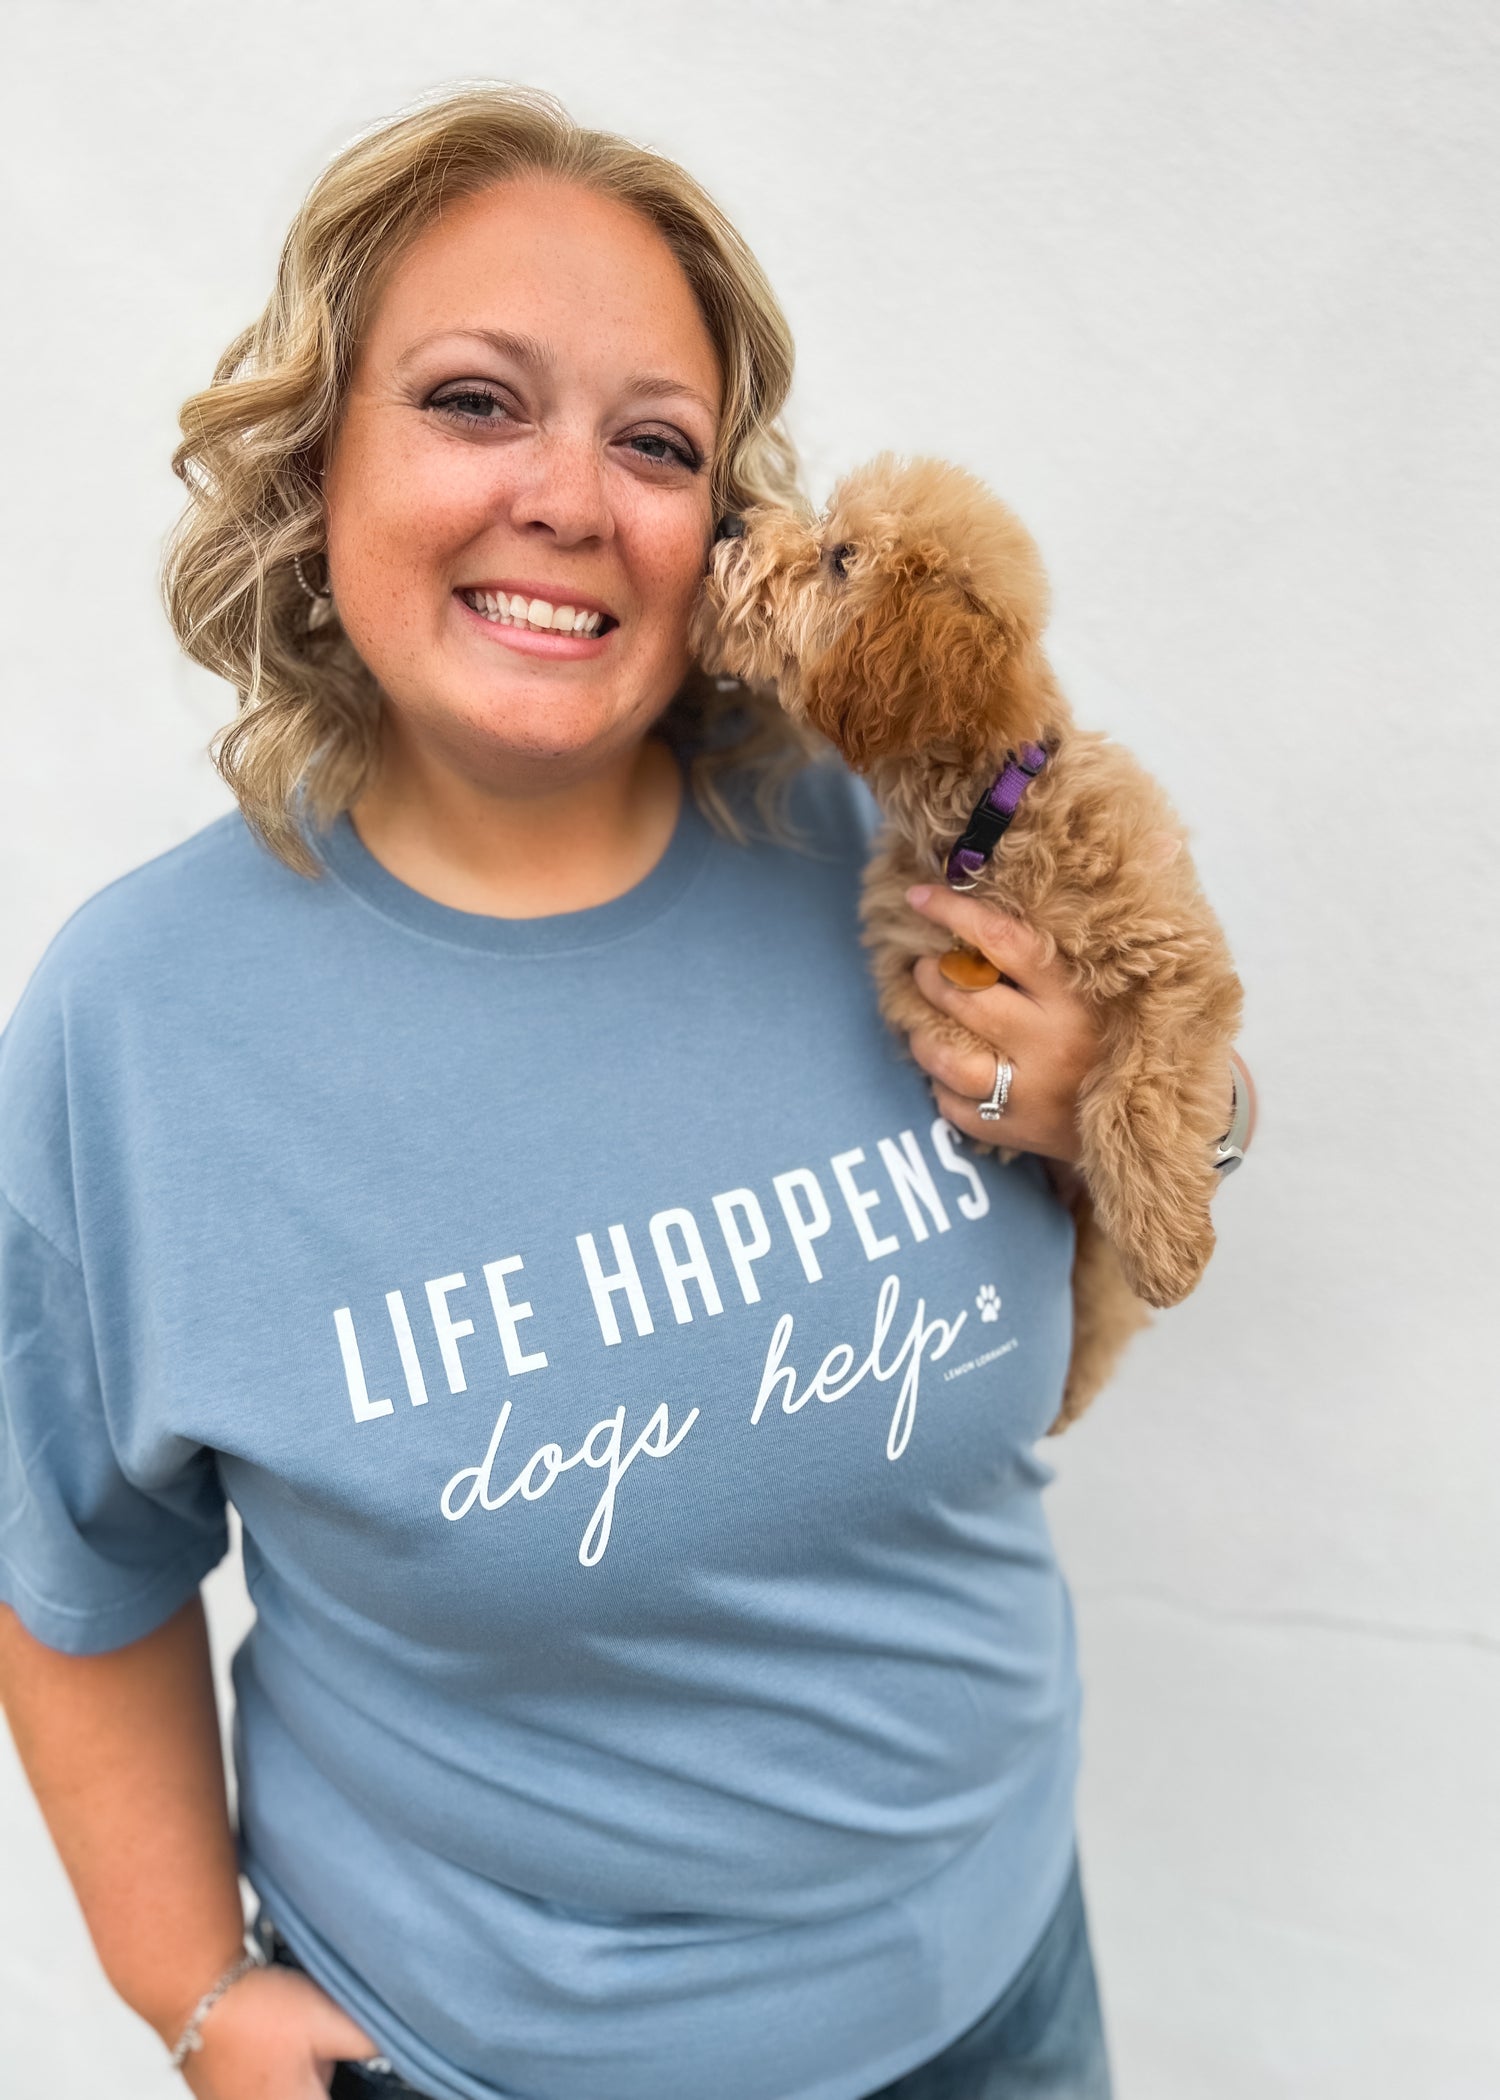 LIFE HAPPENS DOGS HELP - Comfort Wash Graphic Tee